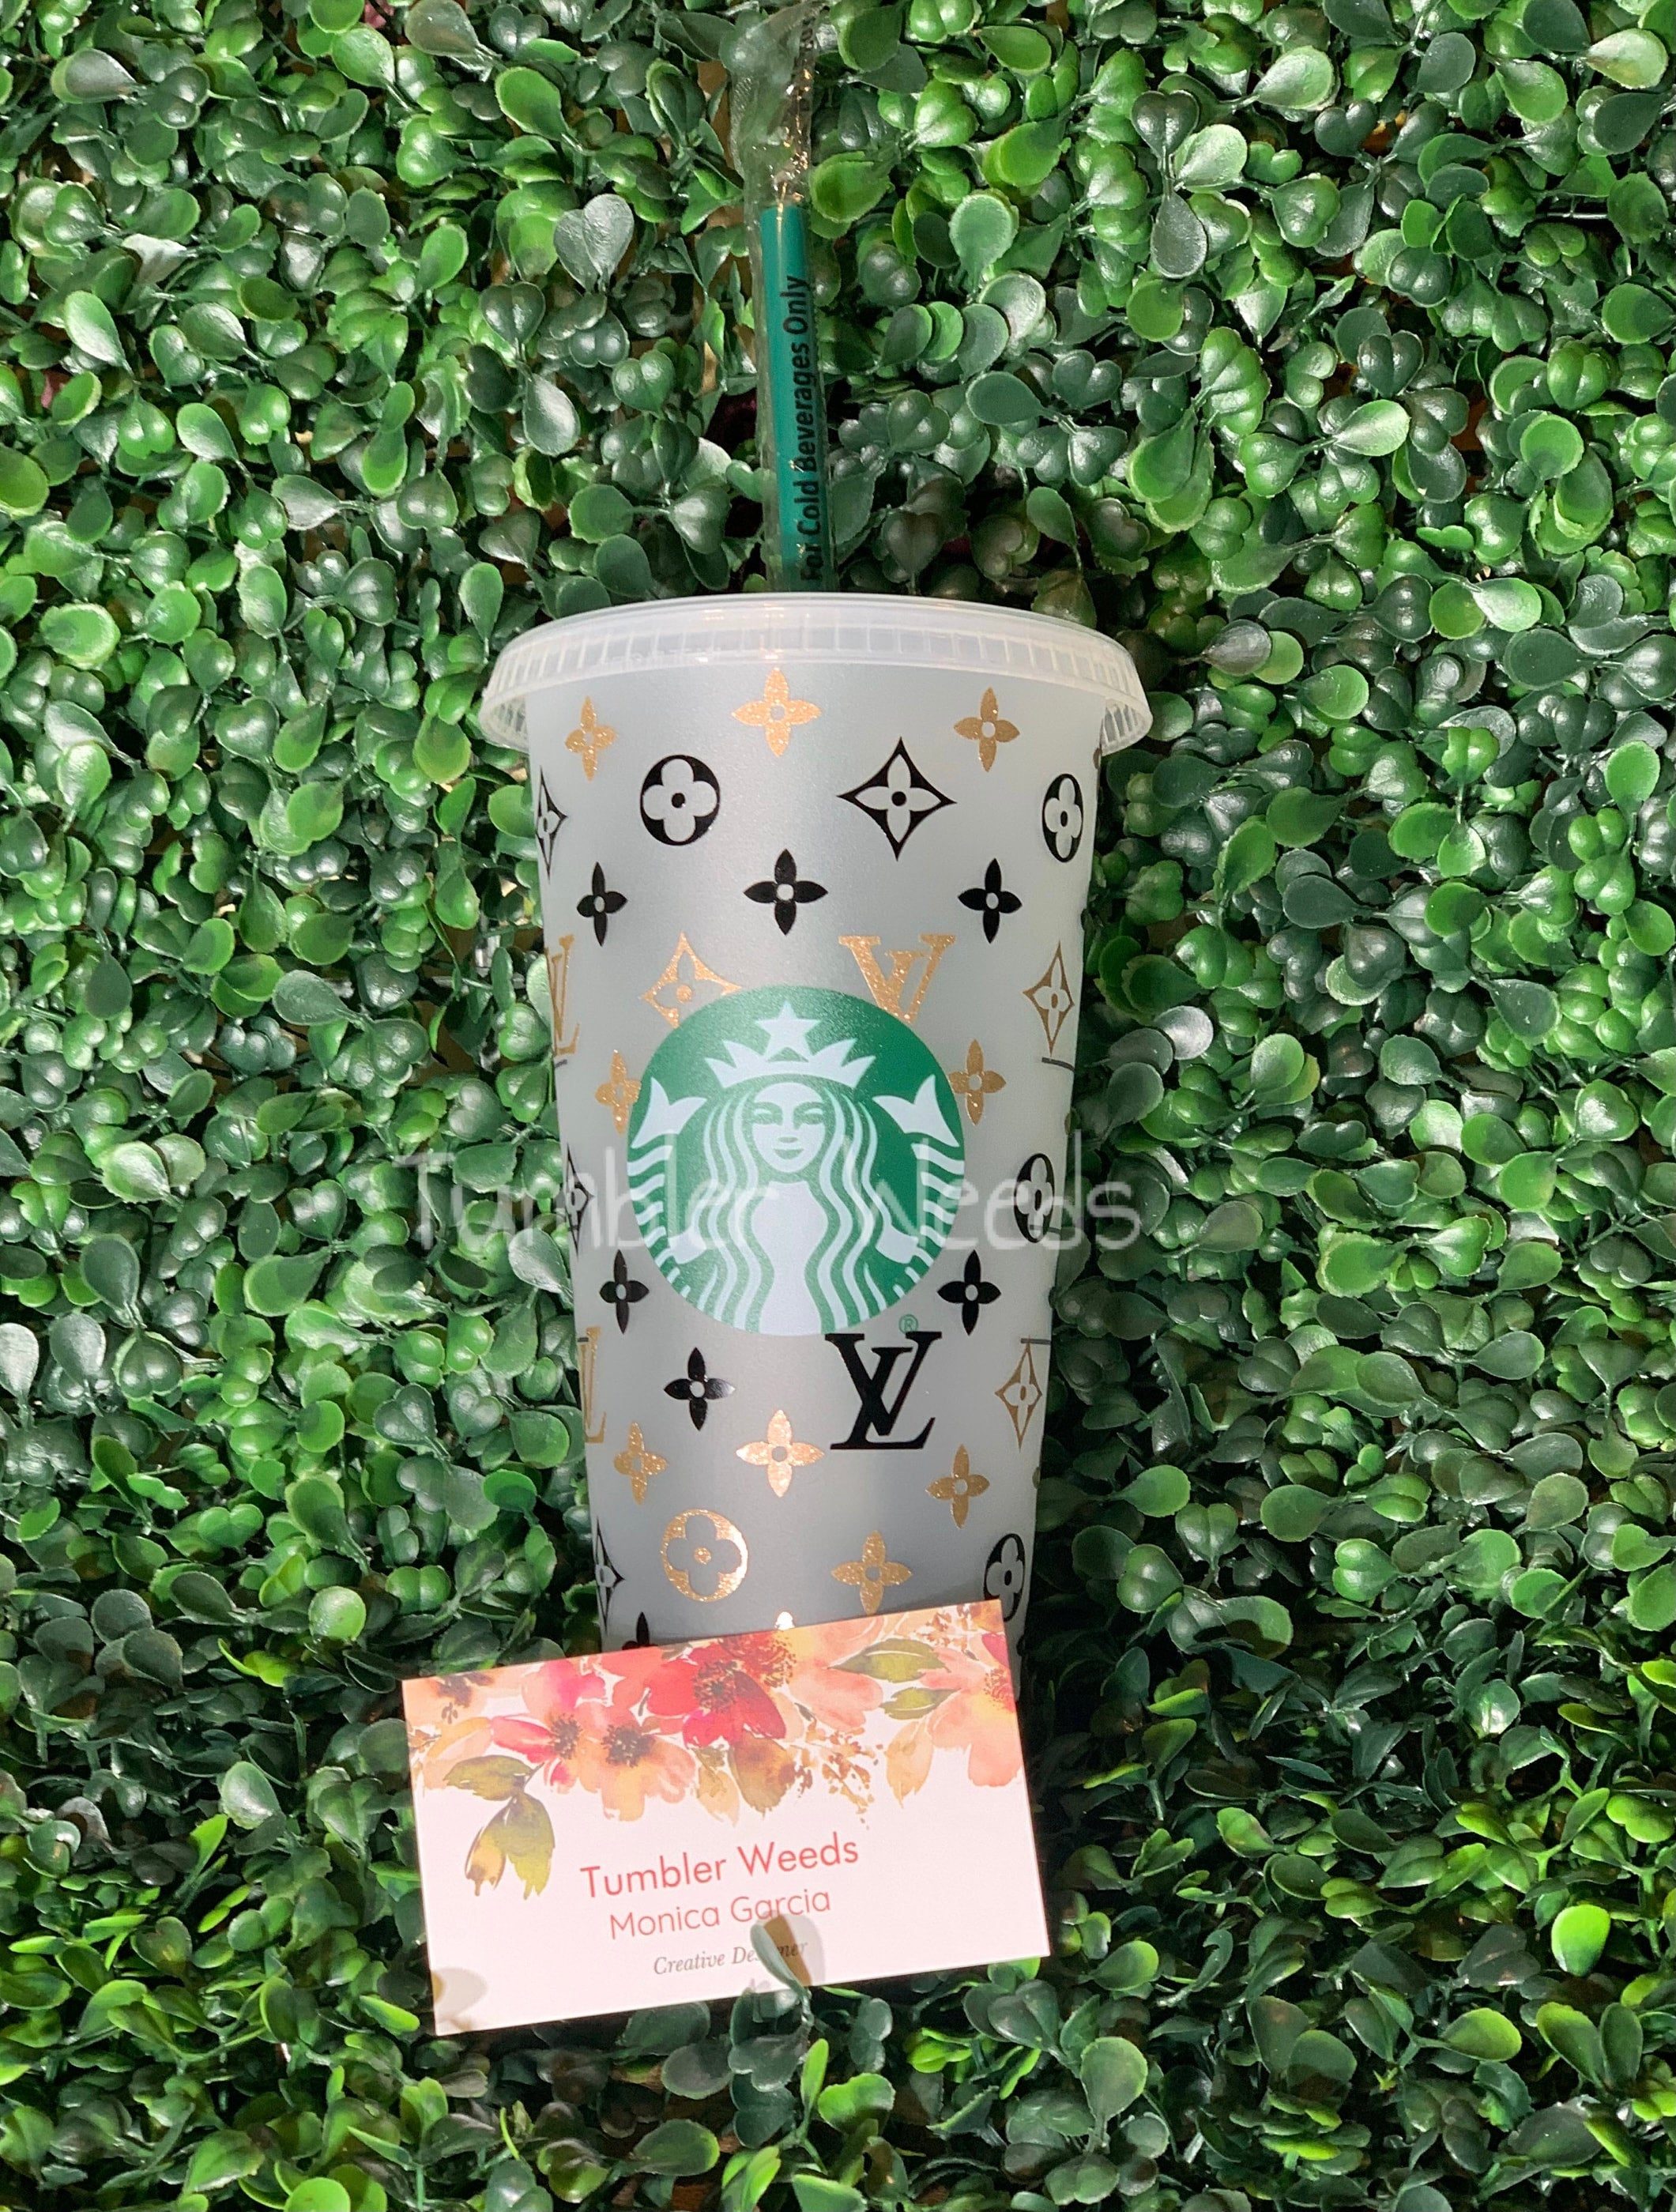 Rose Gold LV Inspired Starbucks Cup